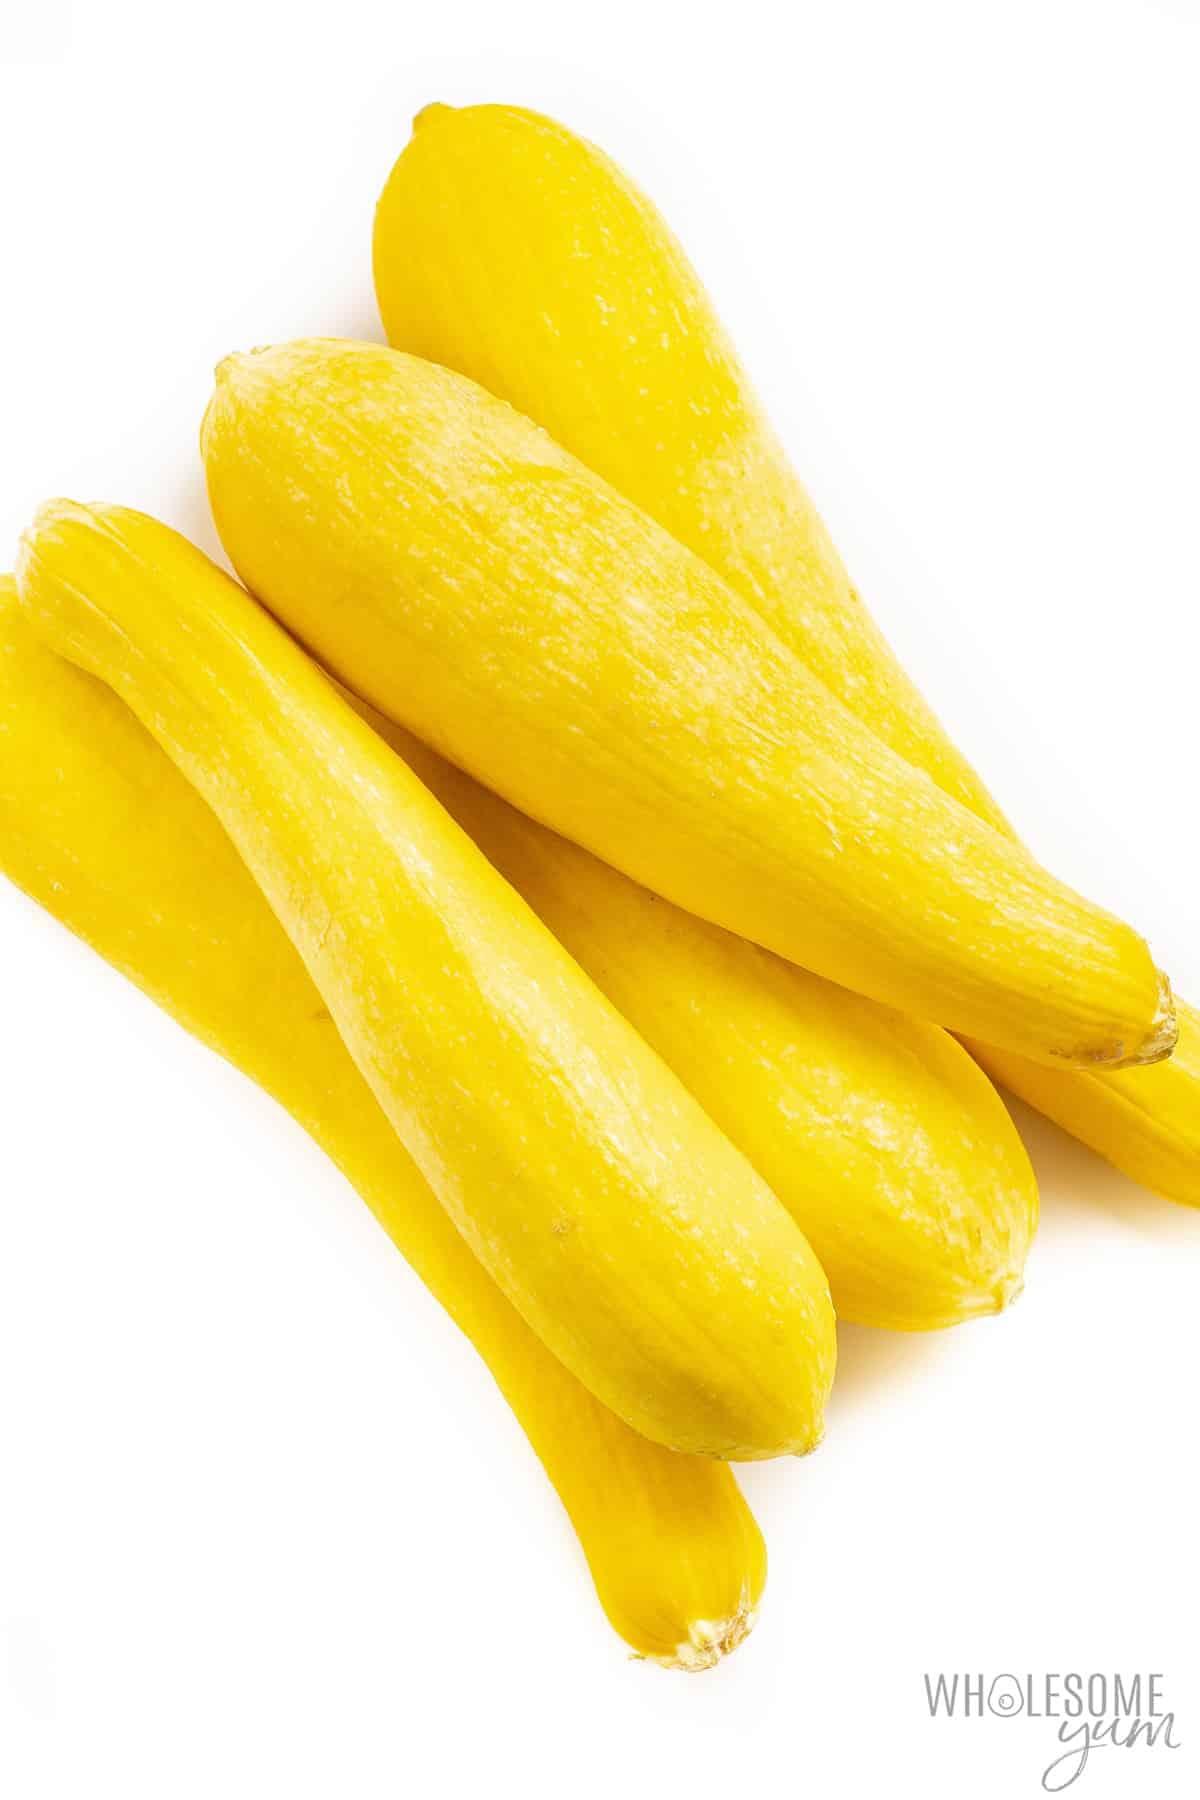 Is yellow squash keto friendly? These raw yellow squashes are keto.